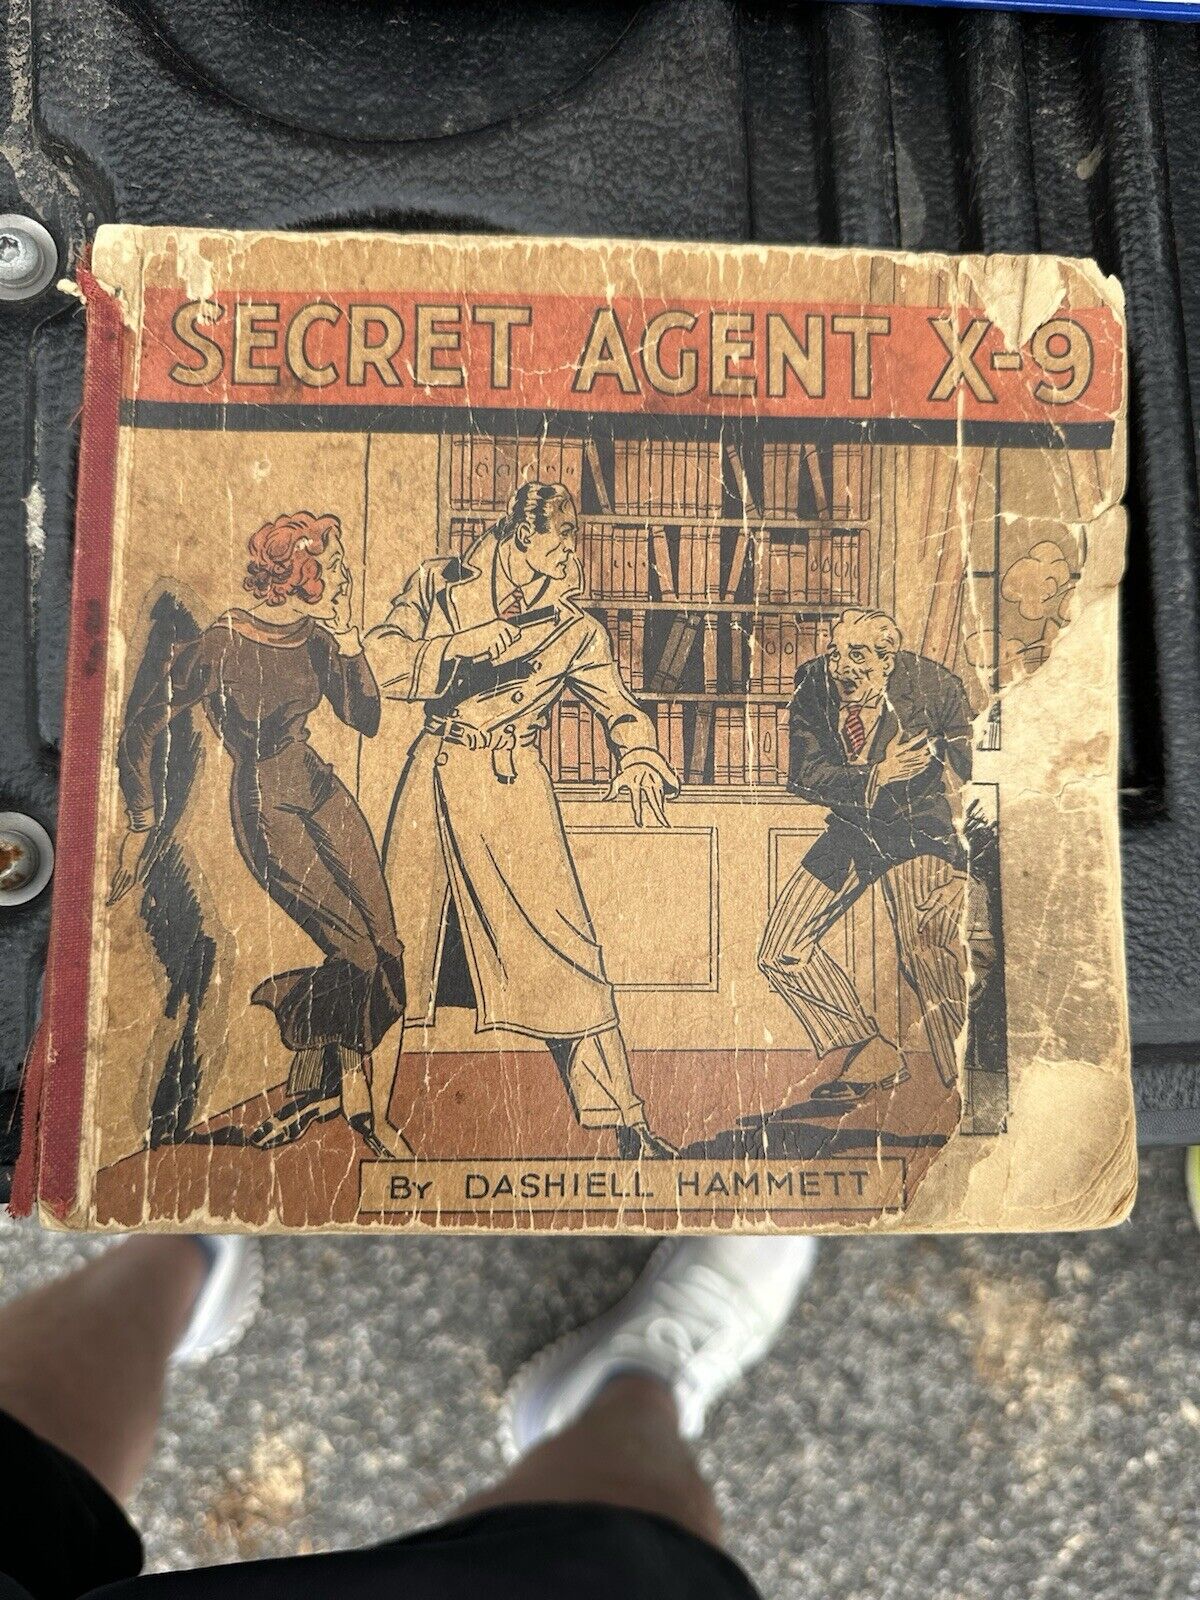 Dashiell Hammett - Secret Agent X-9 - 1st Edition / From 1934 - Vintage